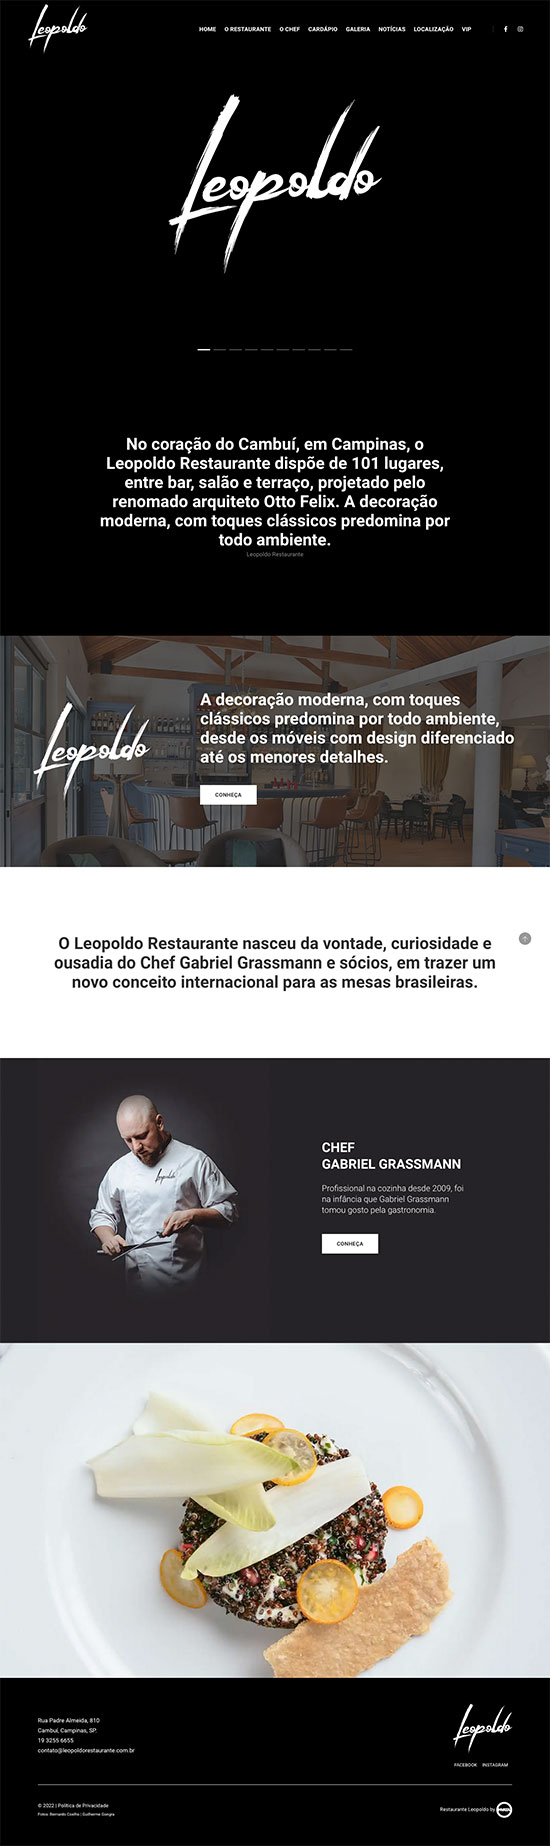 Leopoldo Restaurante